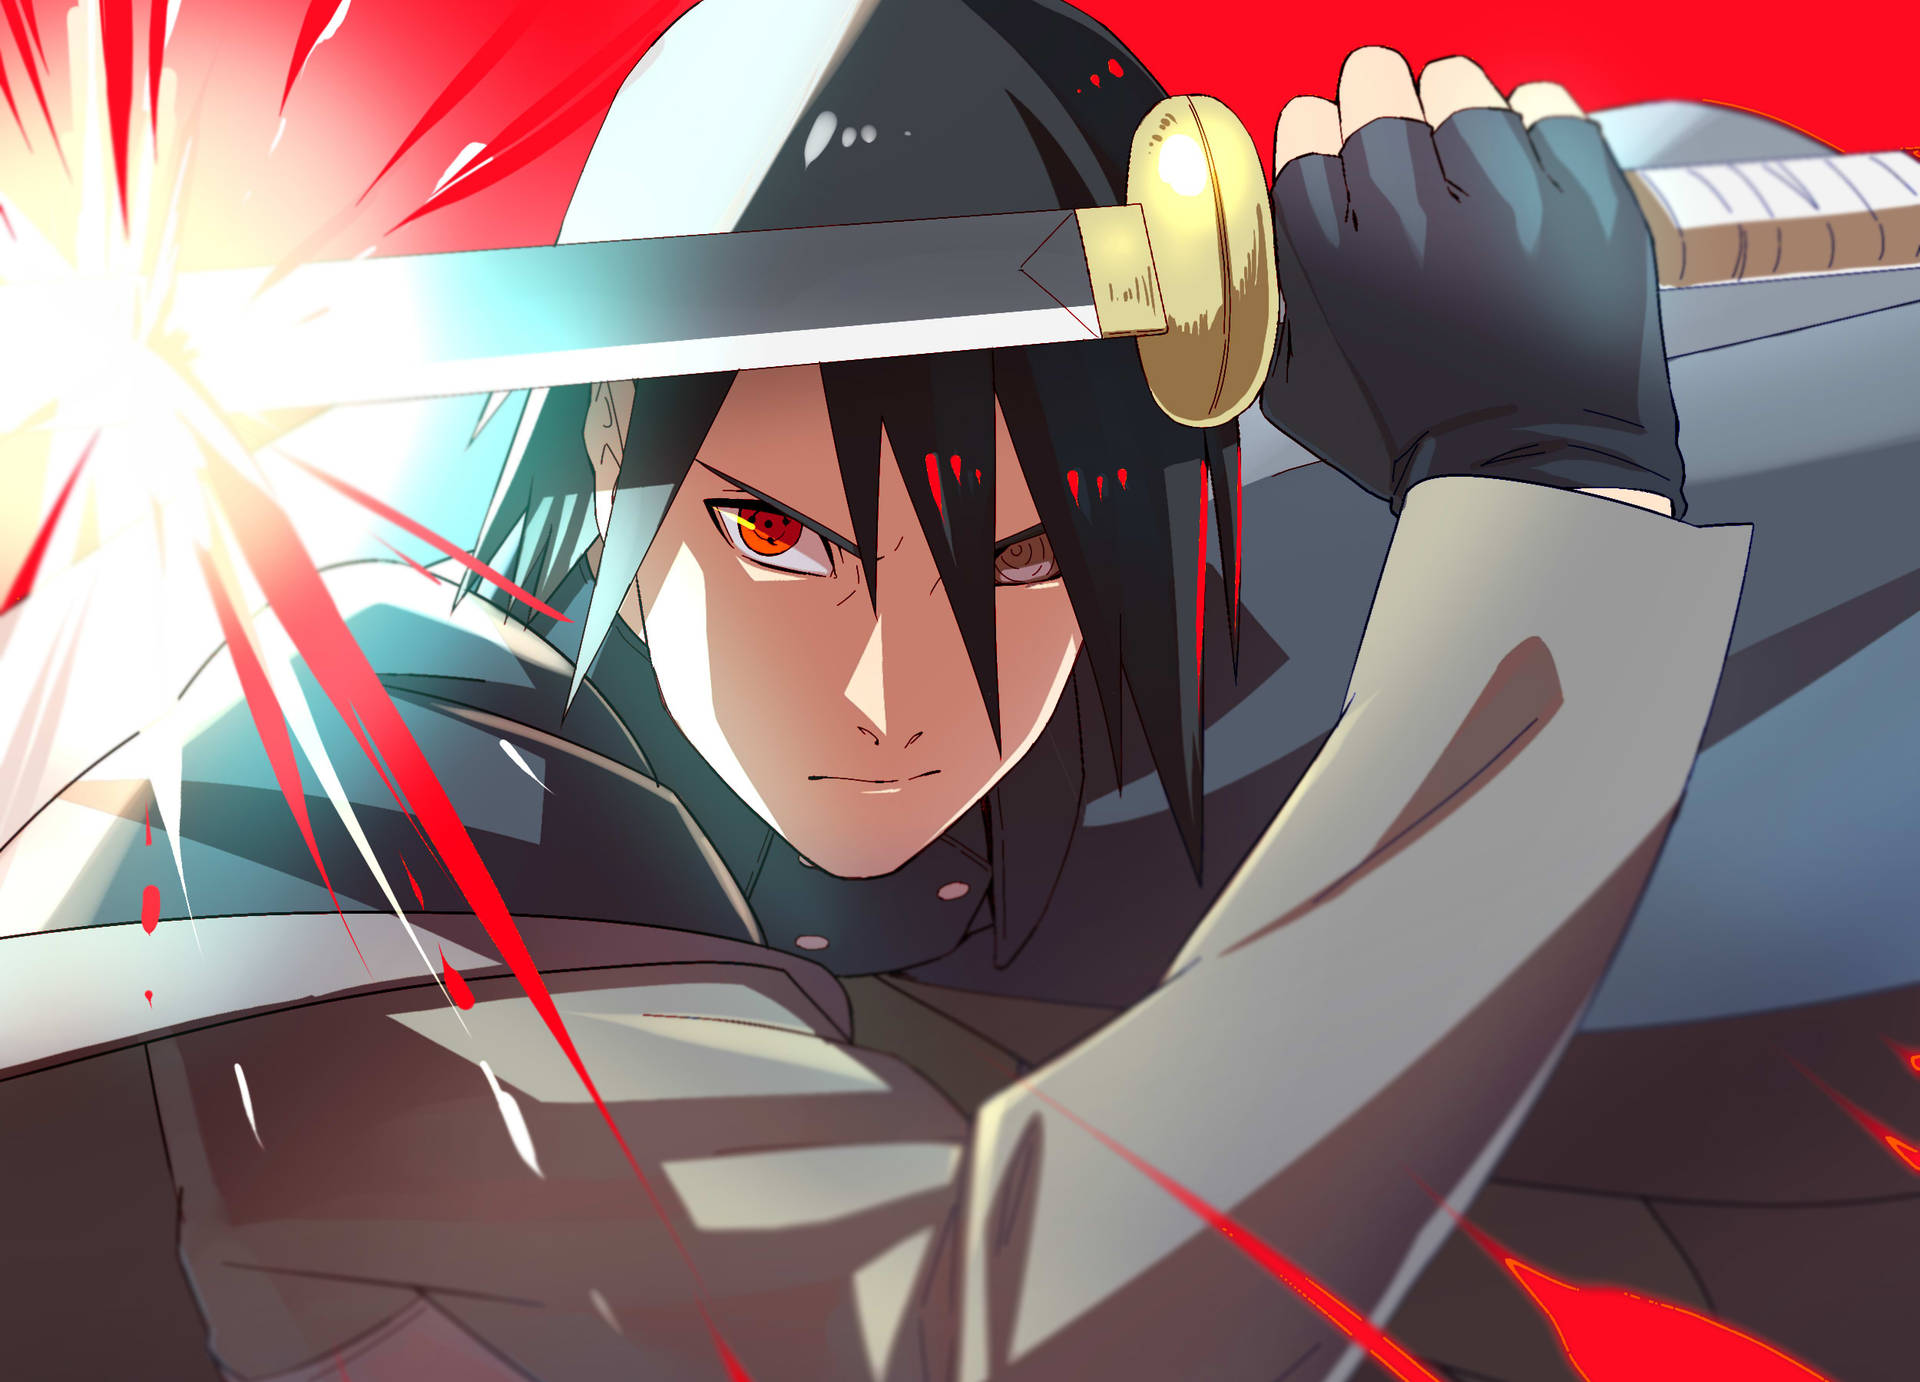 Cool Sasuke Sword Parry